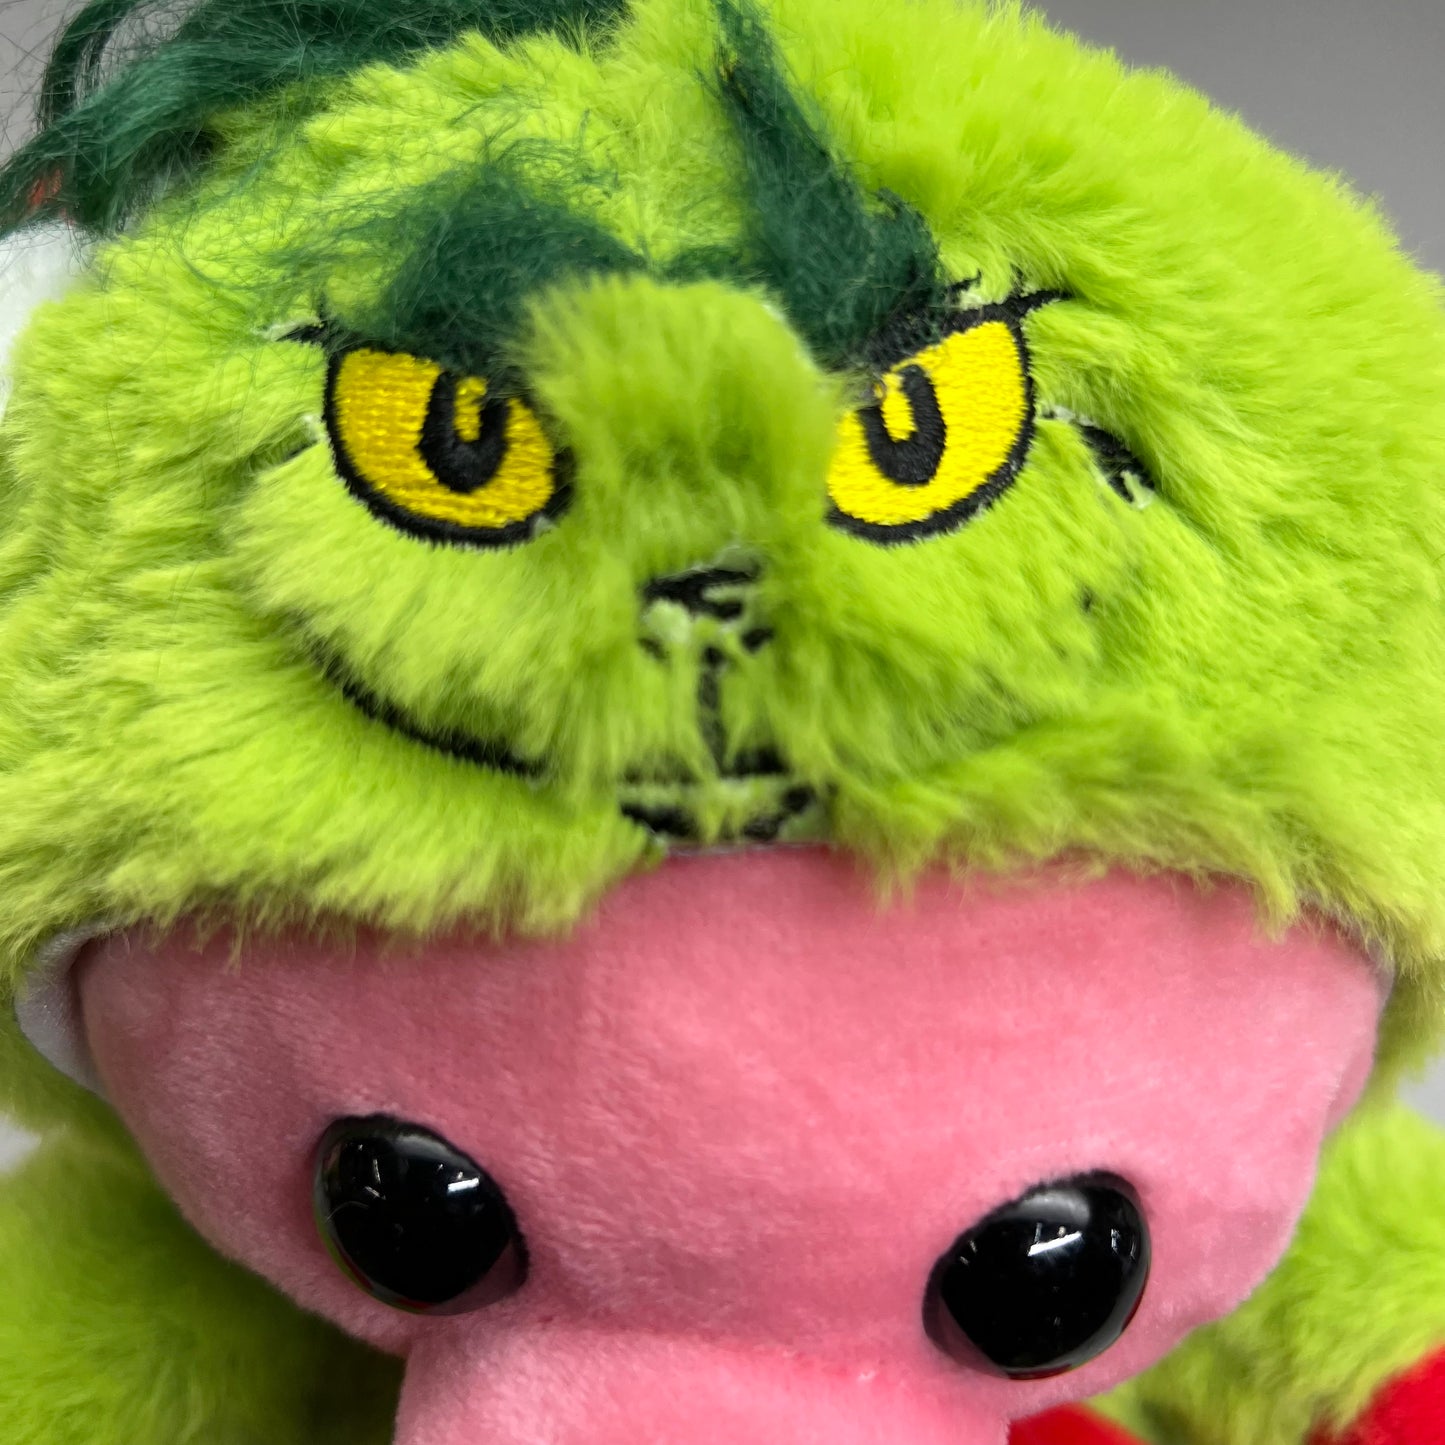 PEEK A BOO TOYS Pig / Grinch Stuffed Animal Green/ Pink XMASDIS30